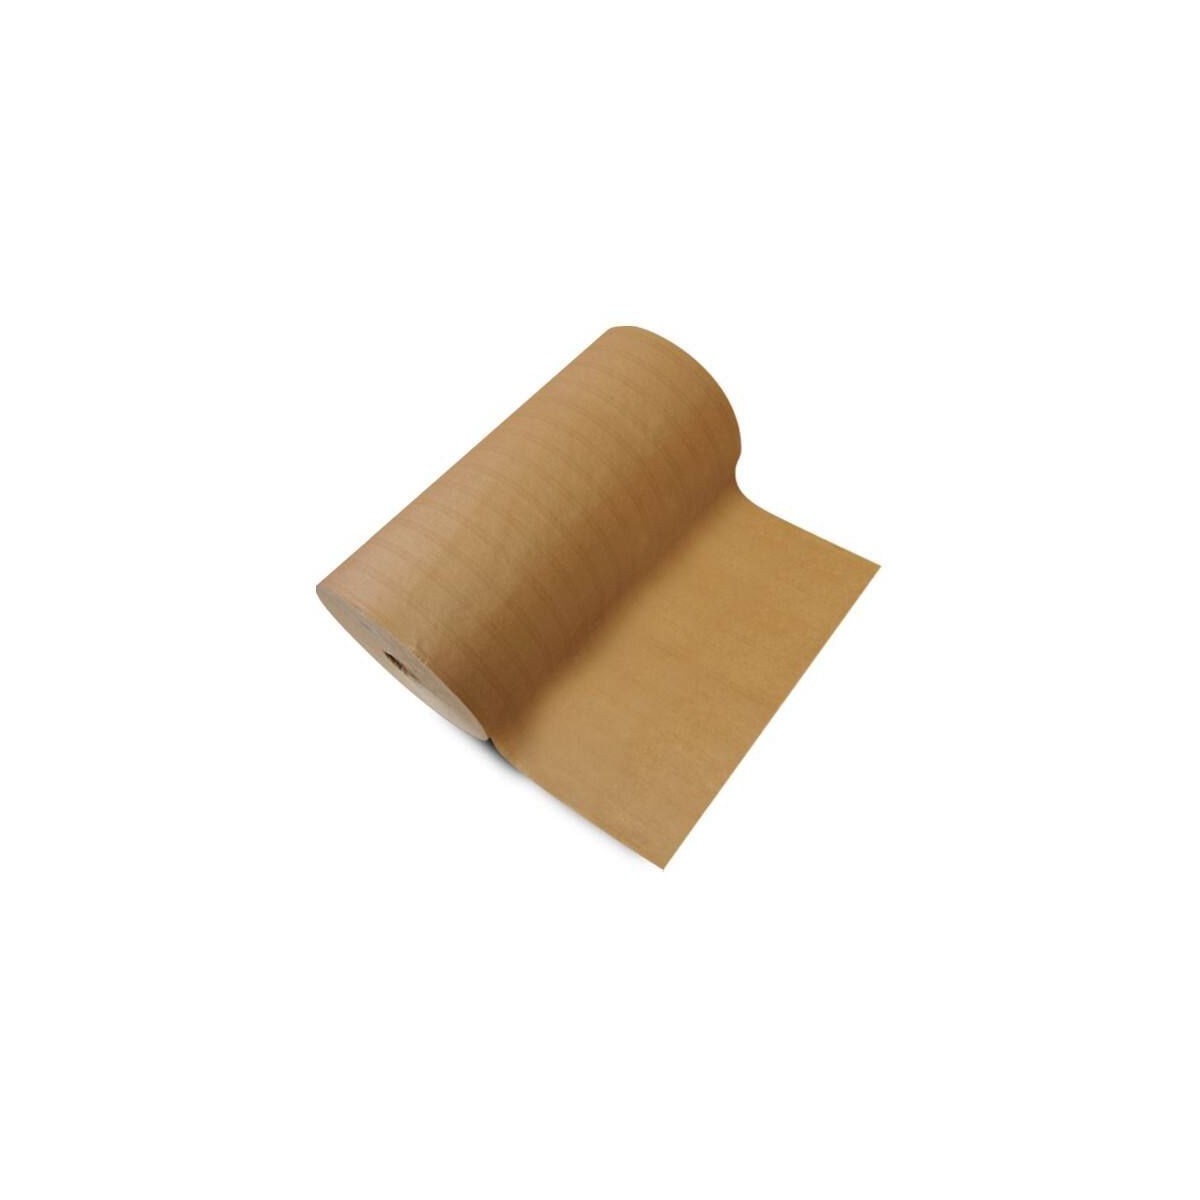 Papier kraft brun recyclé en bobine 50cmx350m - RETIF